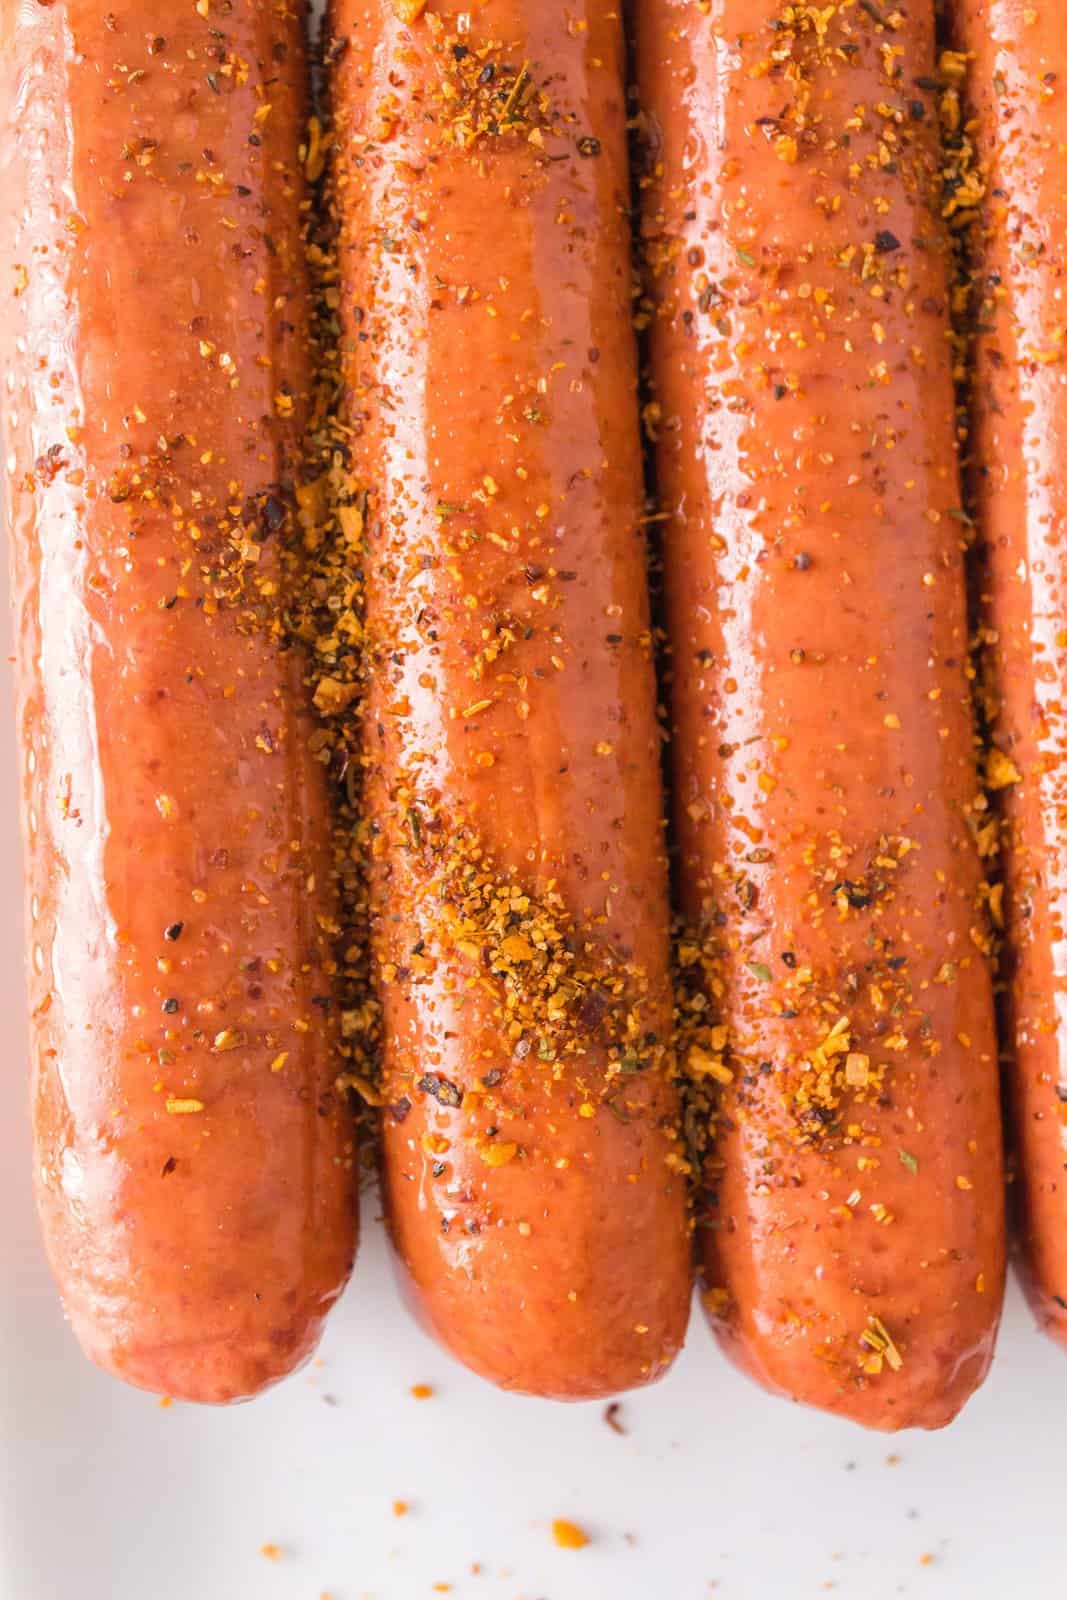 Hot dogs seasoned with oil, seasonings and mustard. 